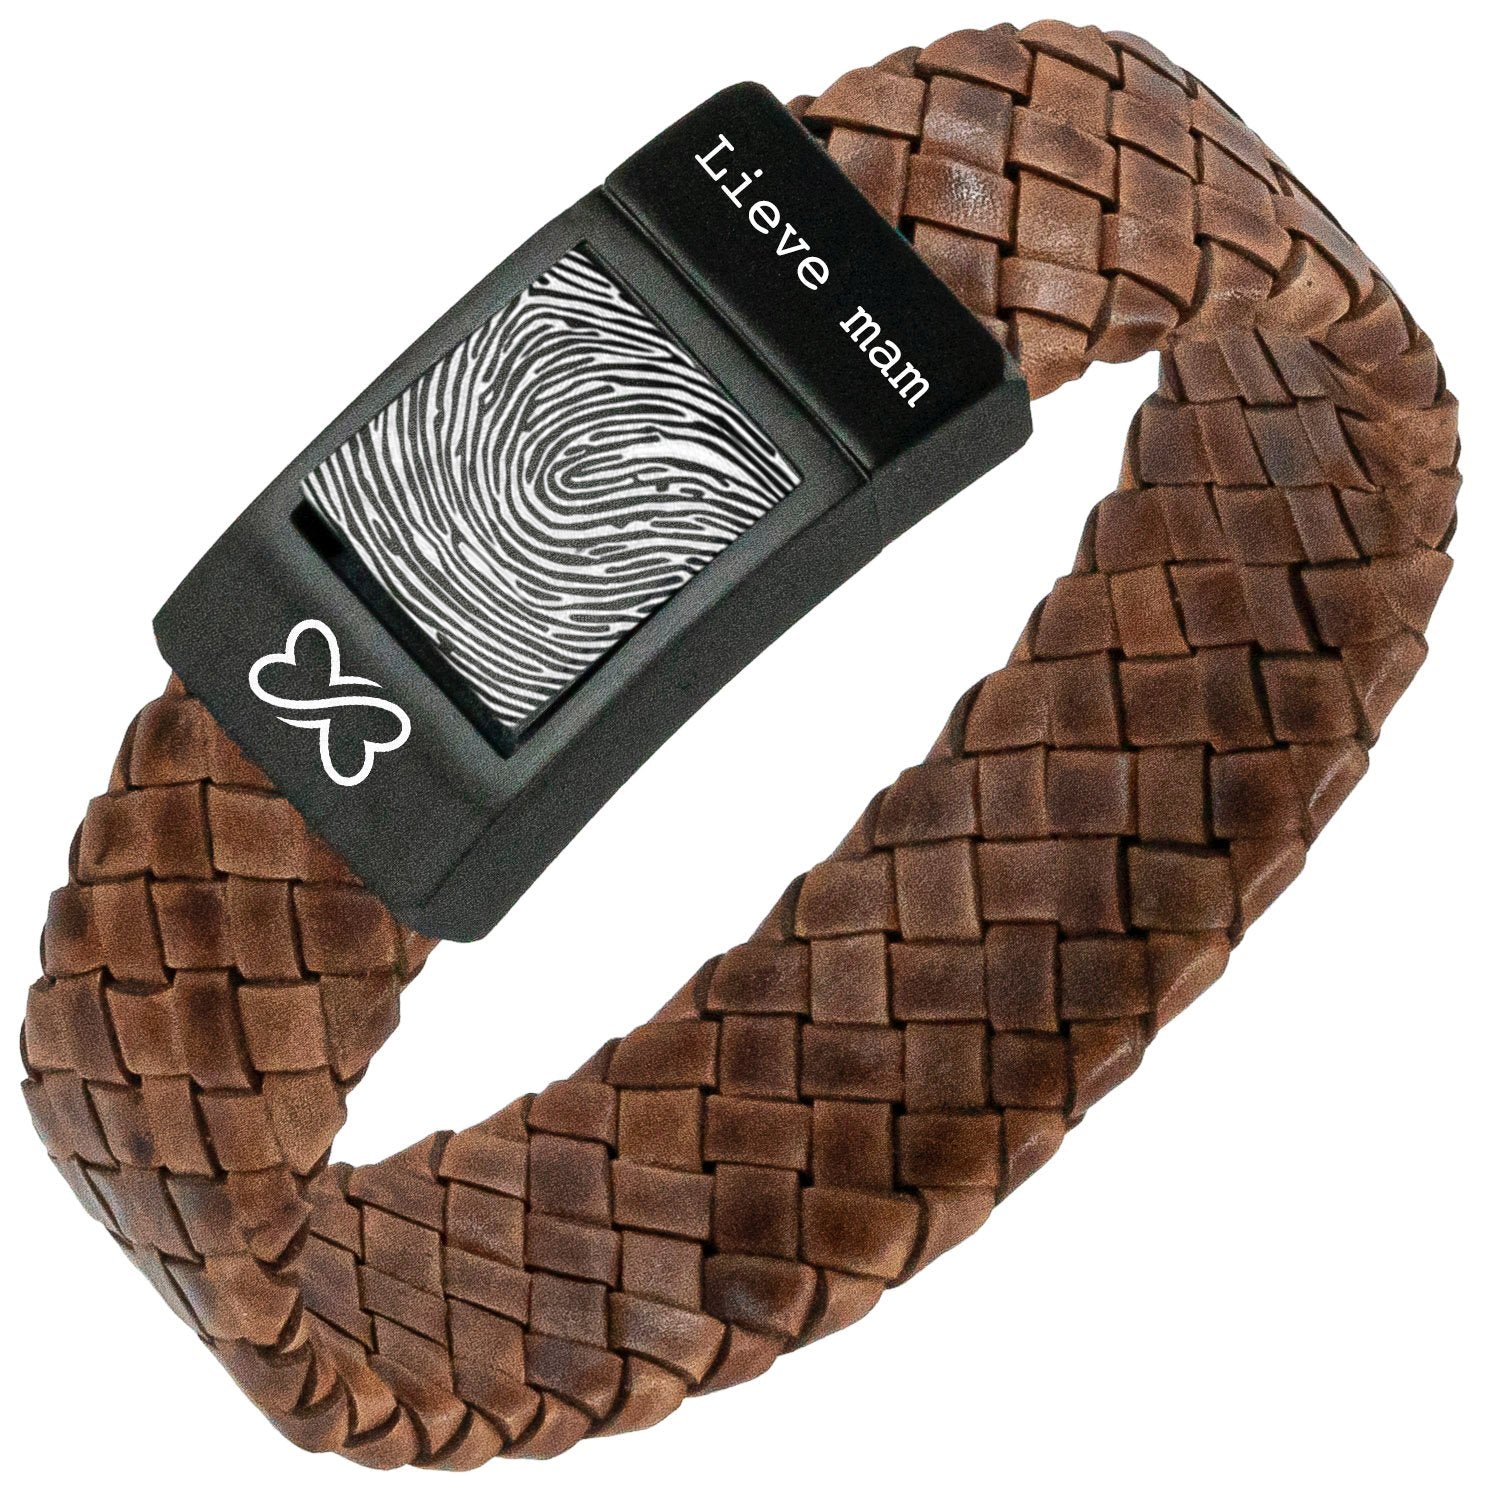 Mama Fingerprint bracelet - Brown braided leather